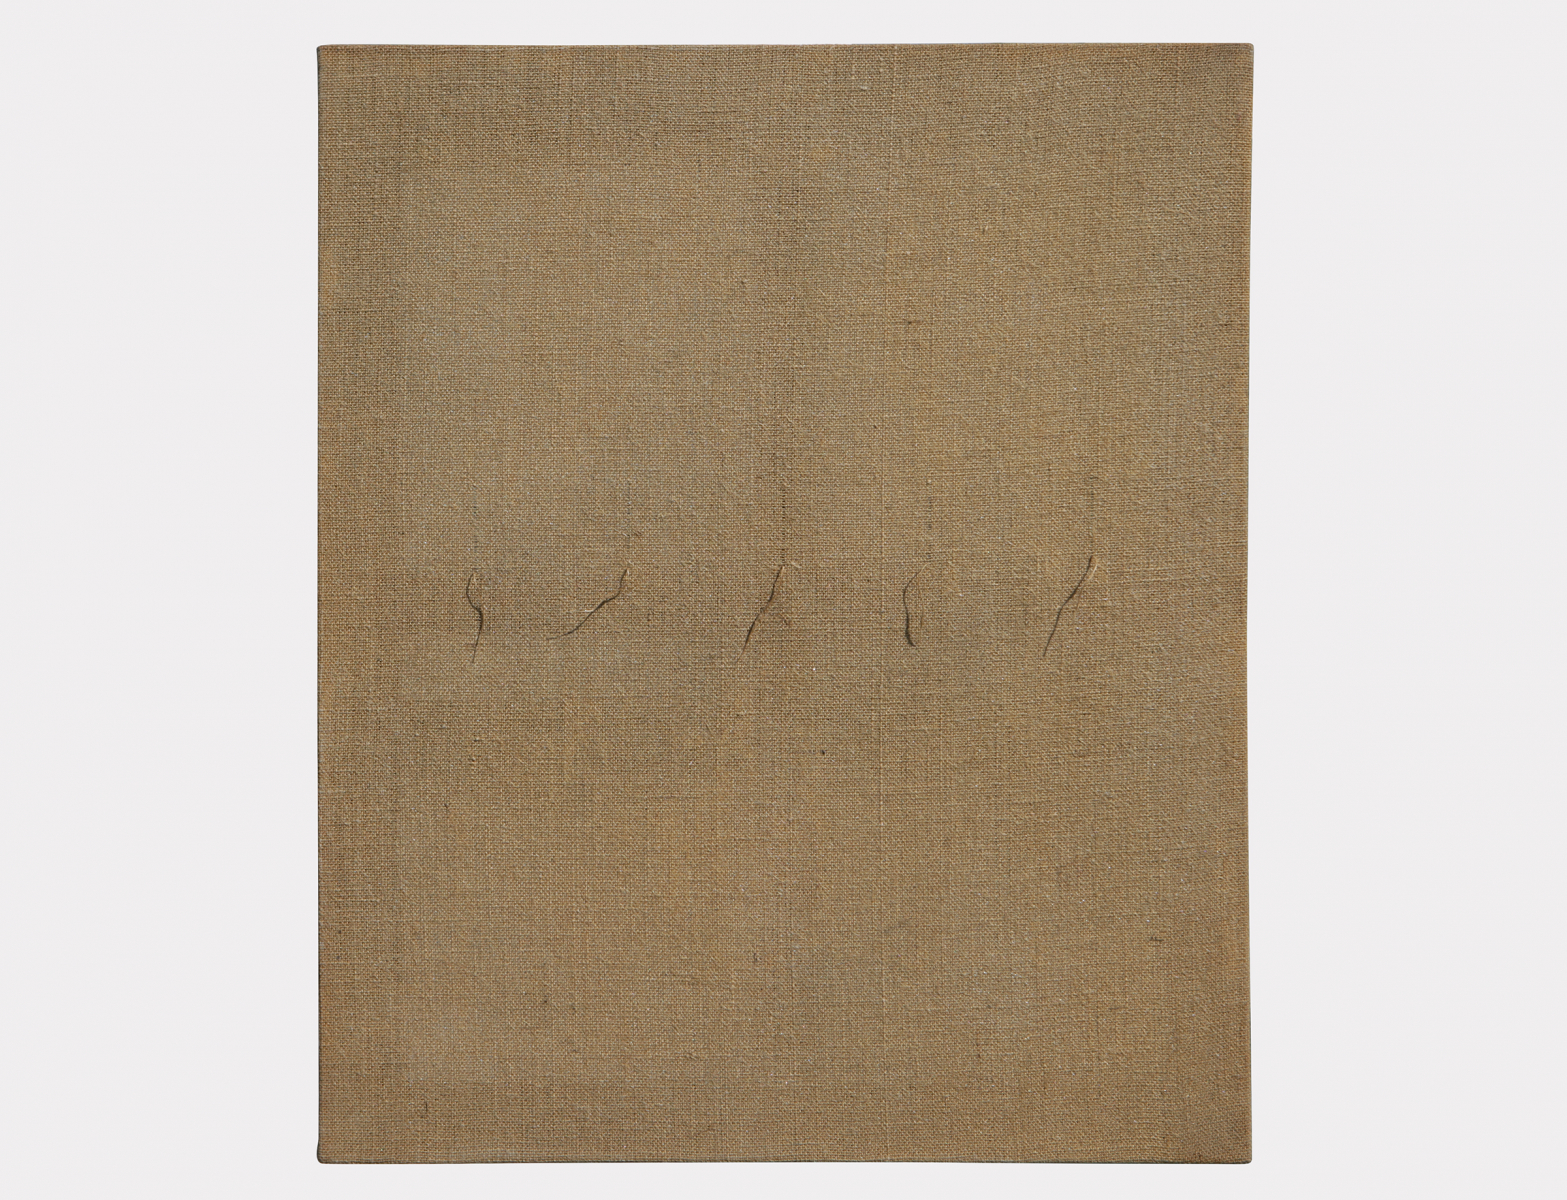 Untitled-7564, 1975, Hemp Cloth, 72.3x61cm